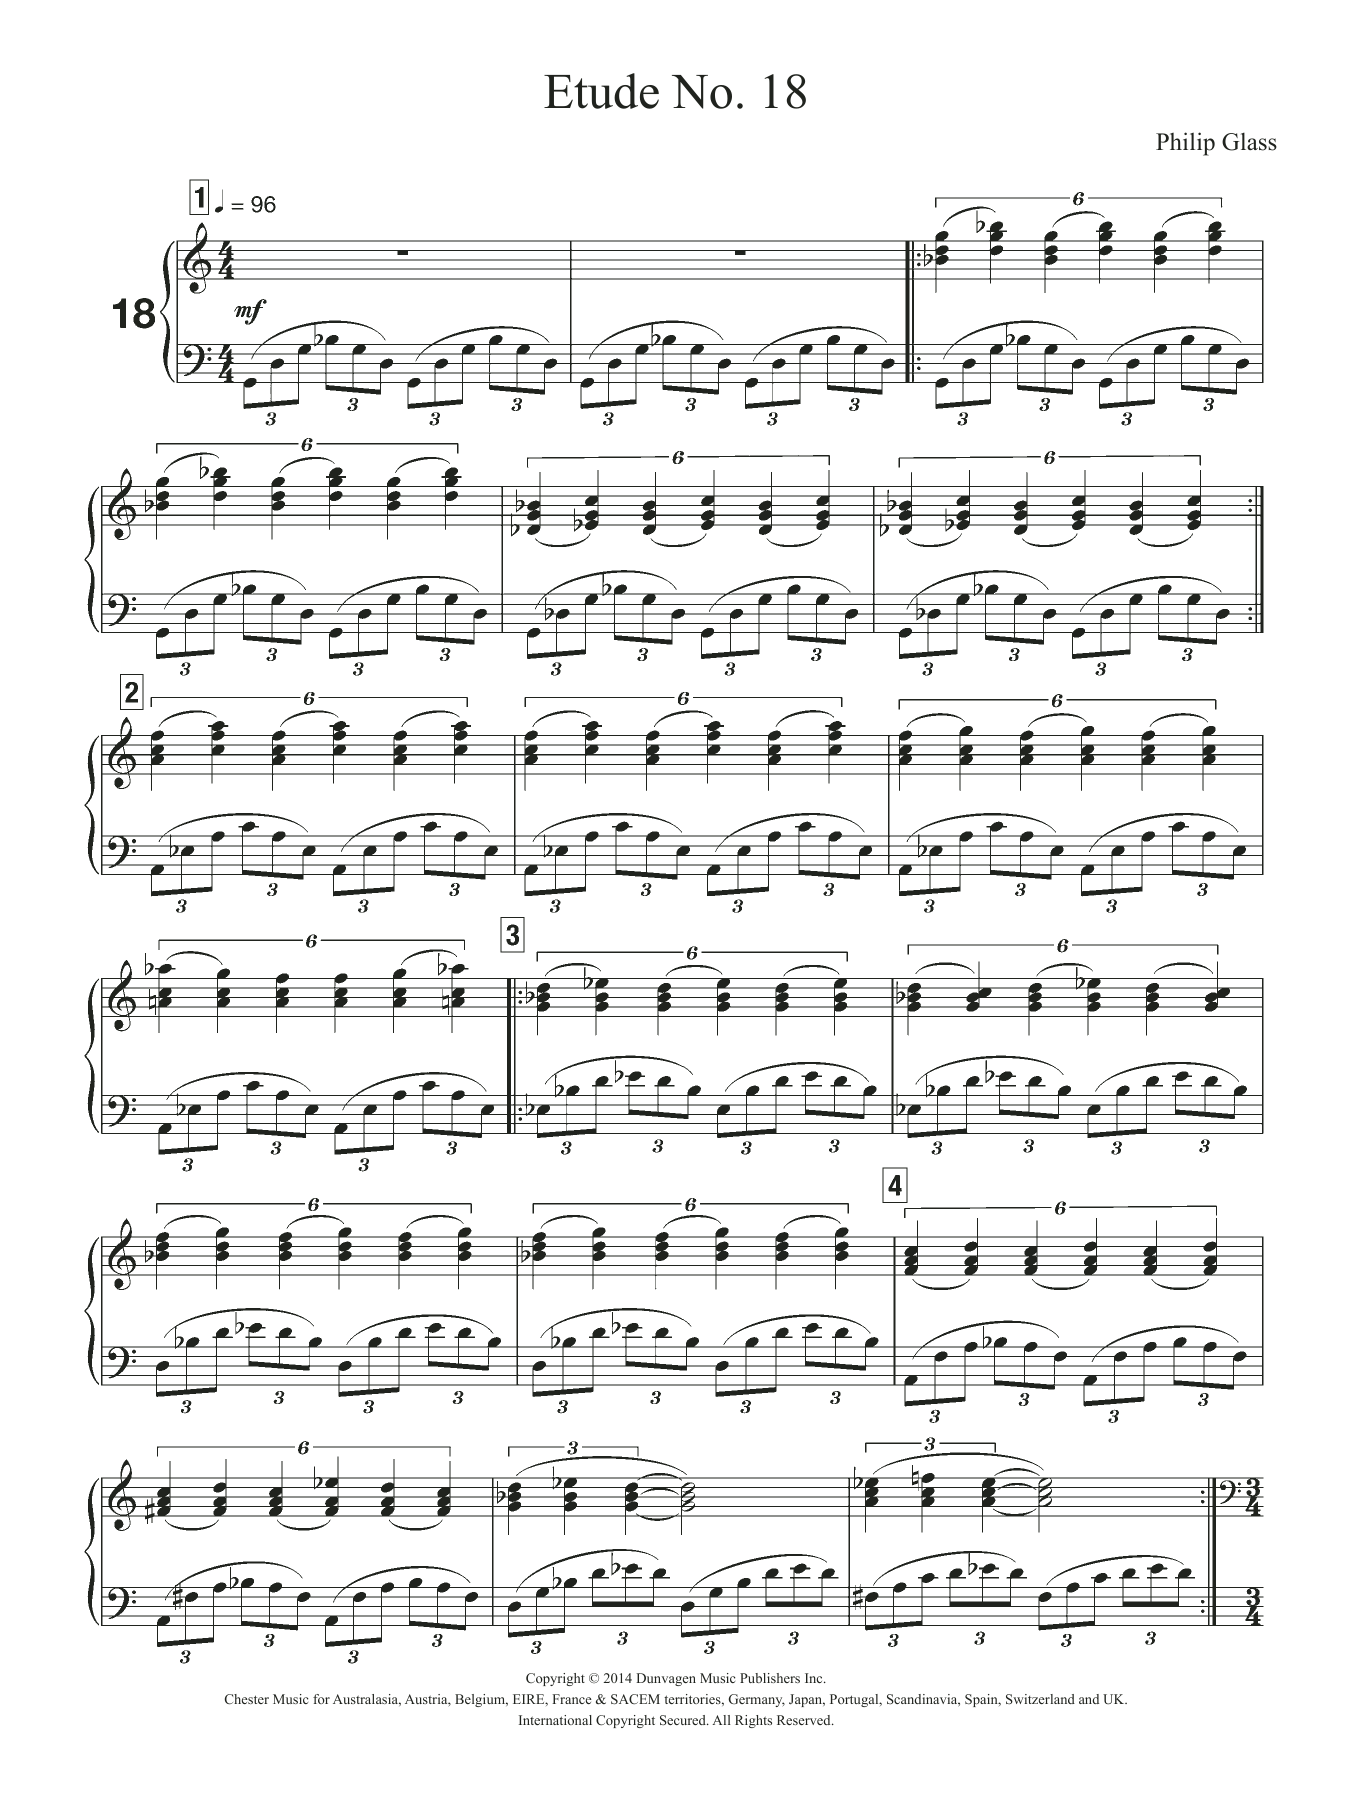 Download Philip Glass Etude No. 18 Sheet Music